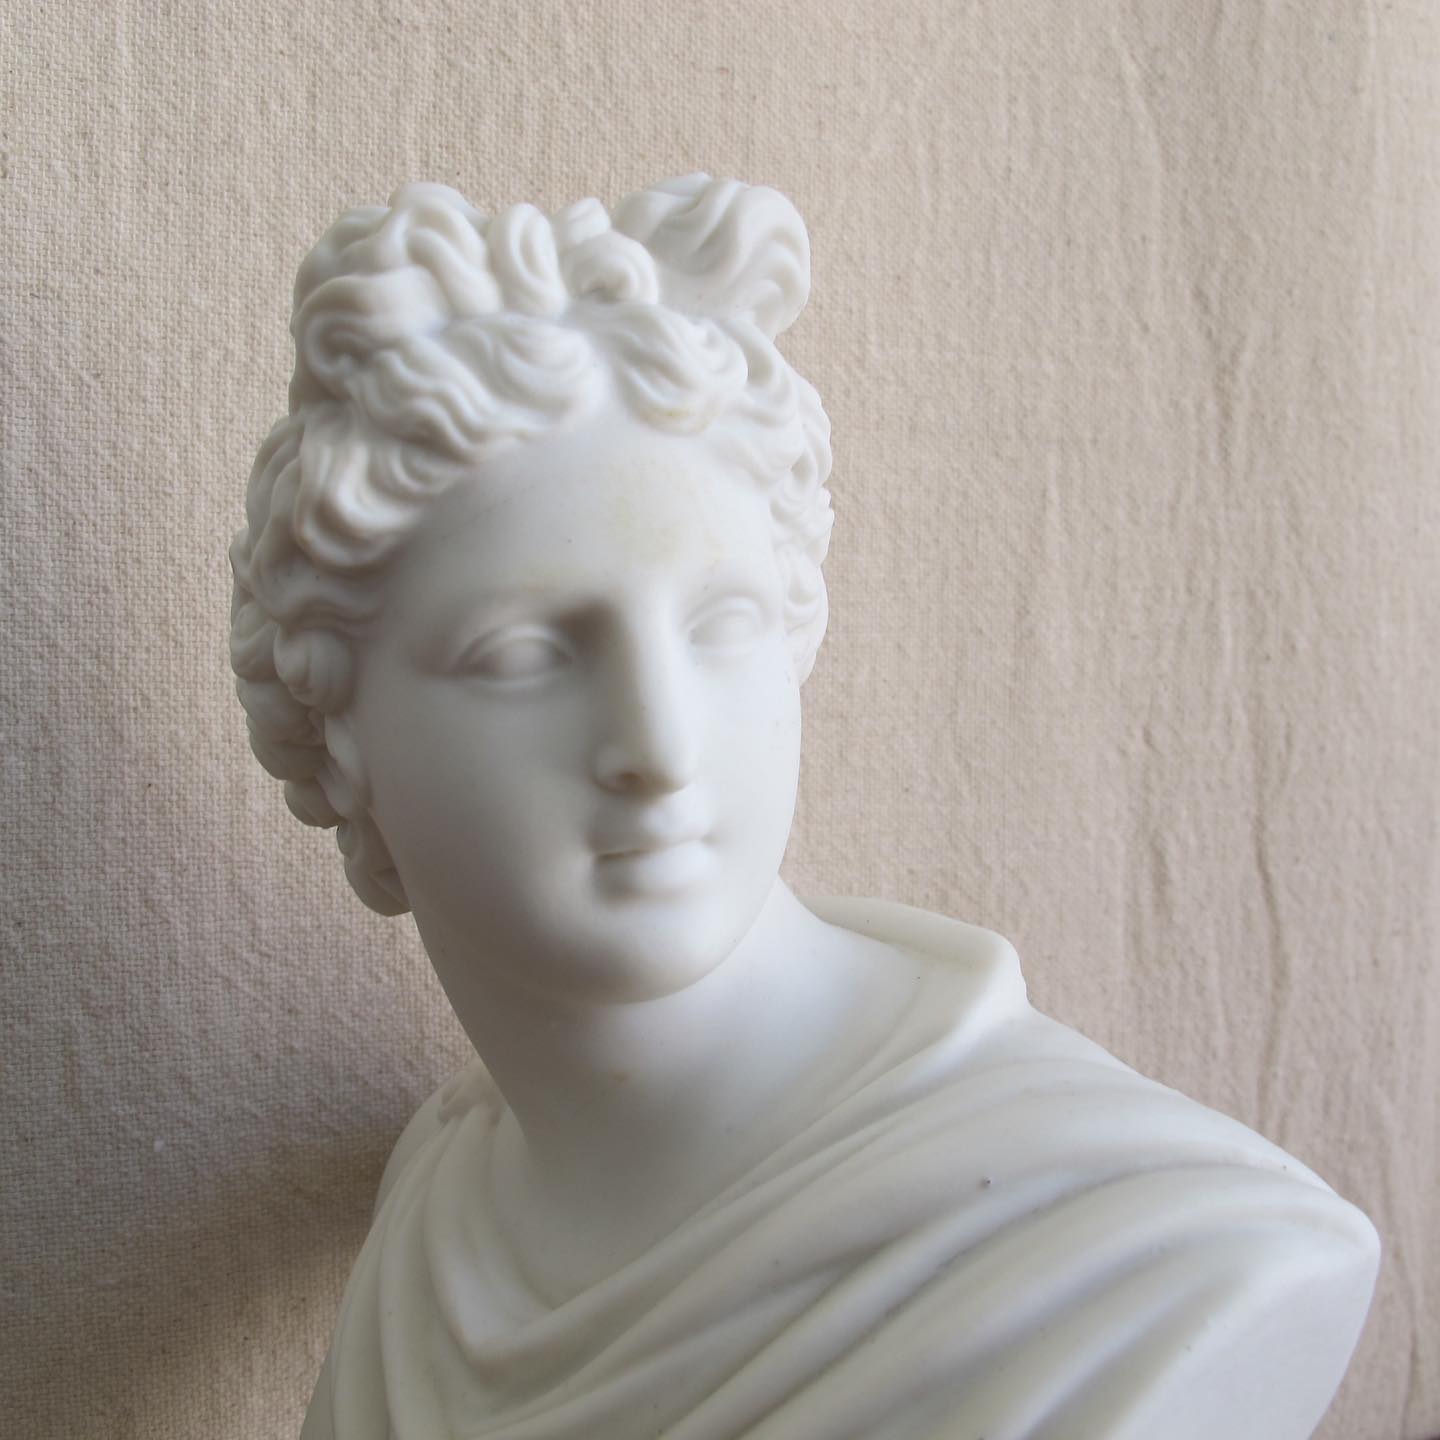 Apollo Belvedere Parian Grand Tour antique bust